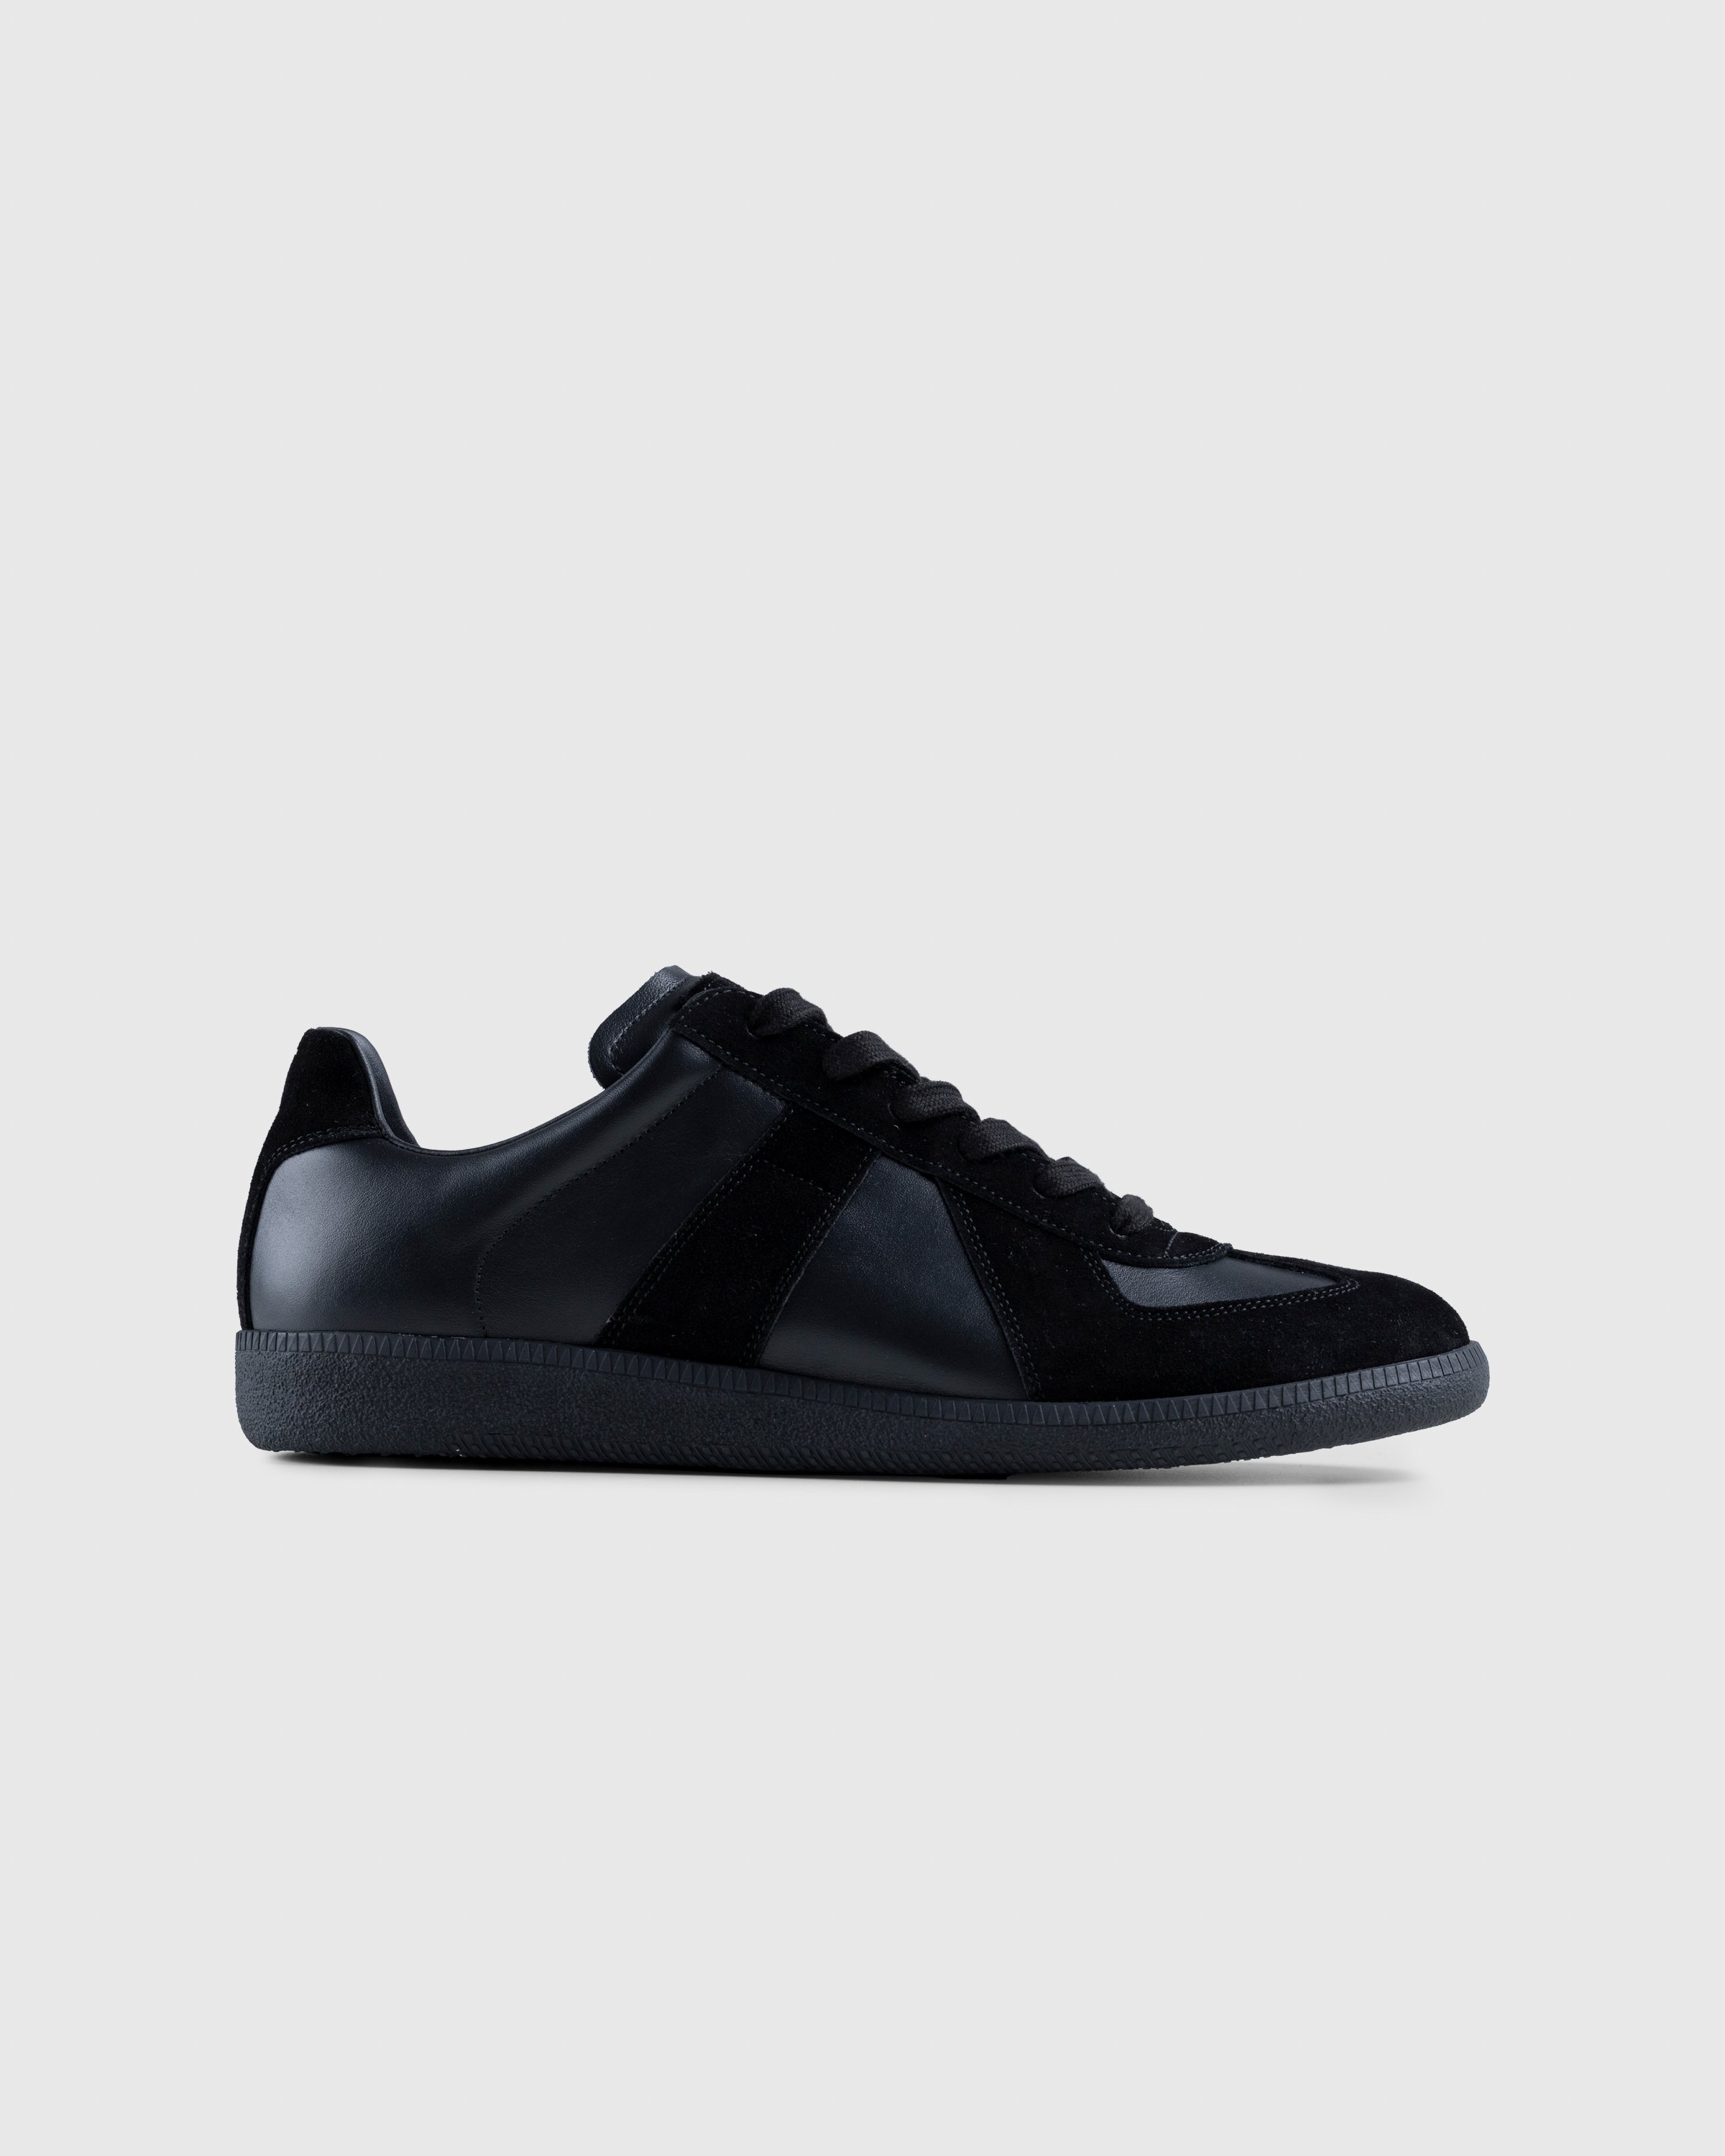 Maison Margiela - Leather Replica Sneakers Black - Footwear - Black - Image 1